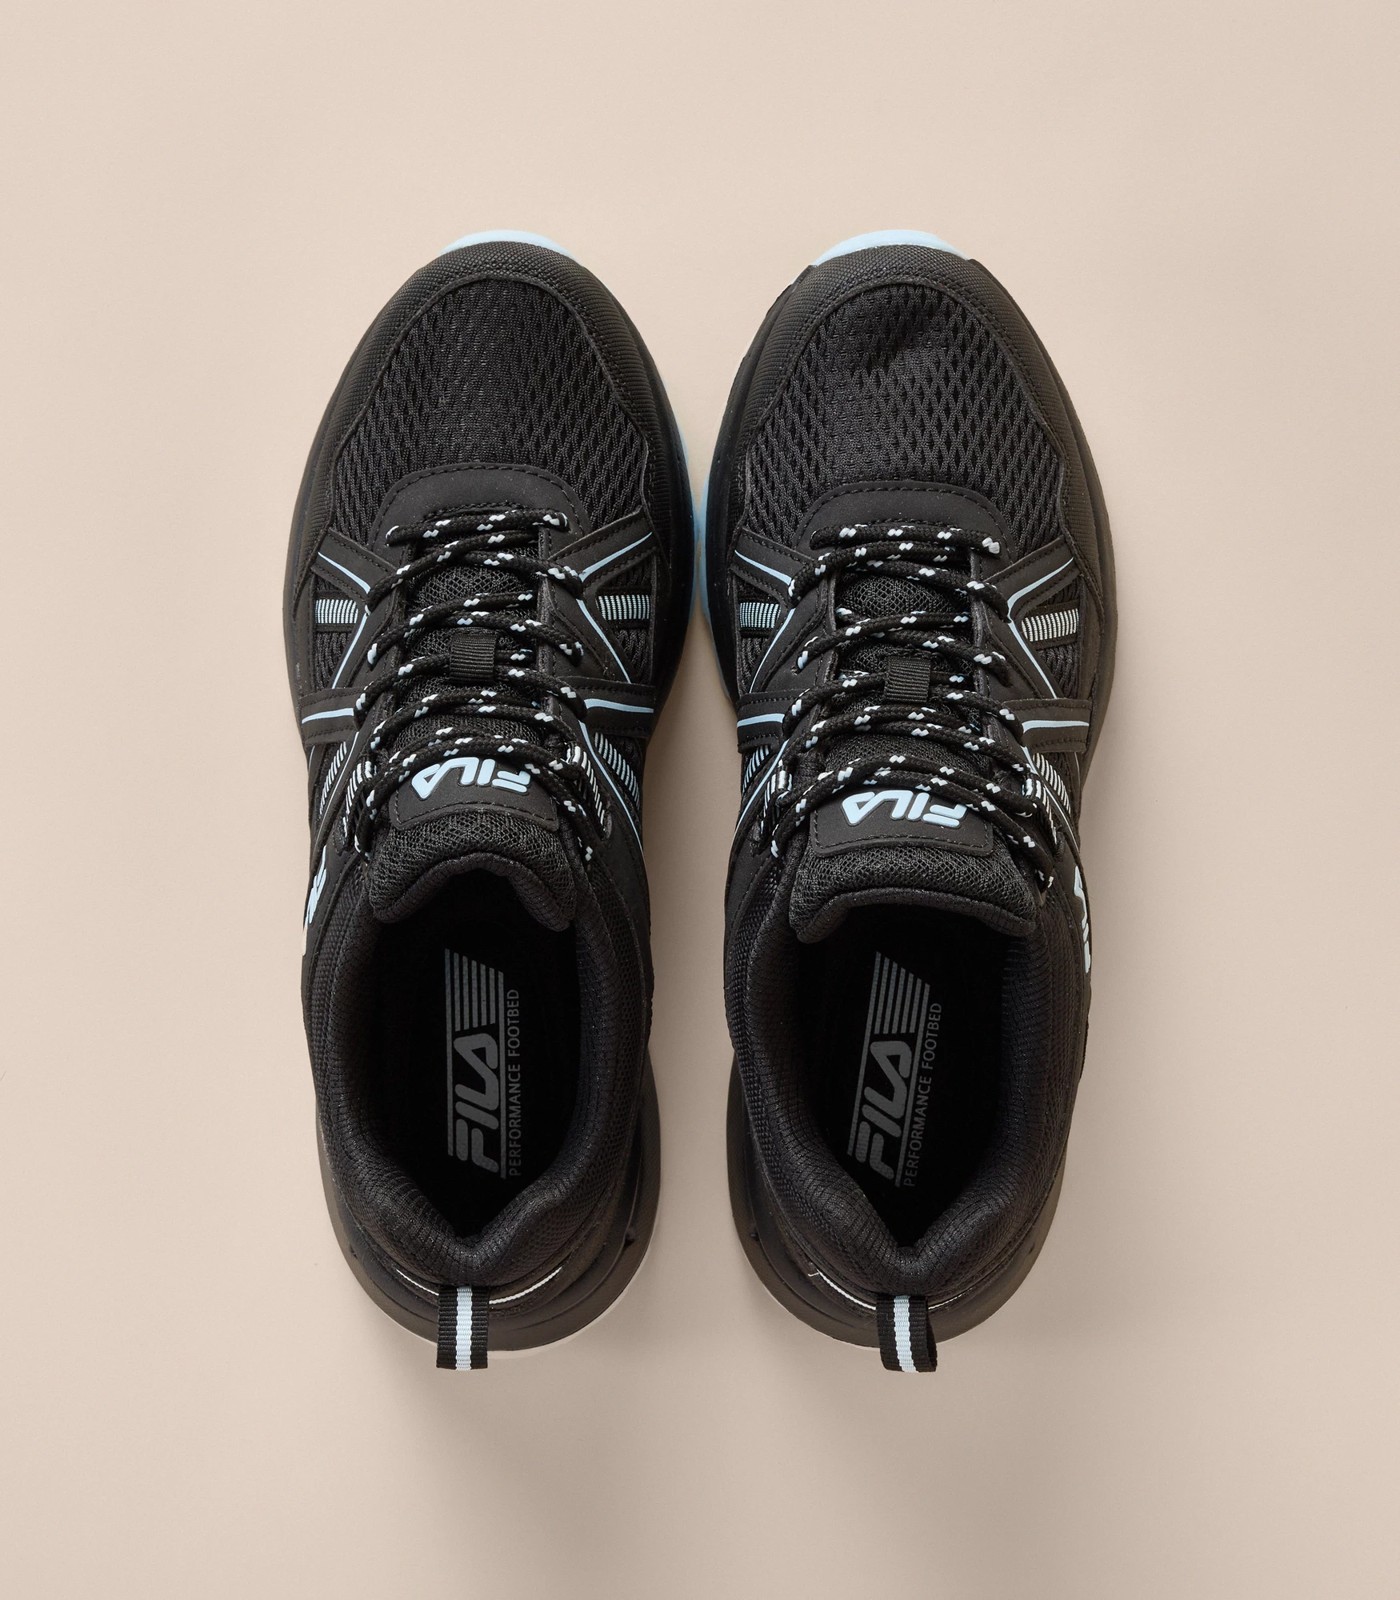 Fila Womens Andria Trail Sneakers - Black/Blue